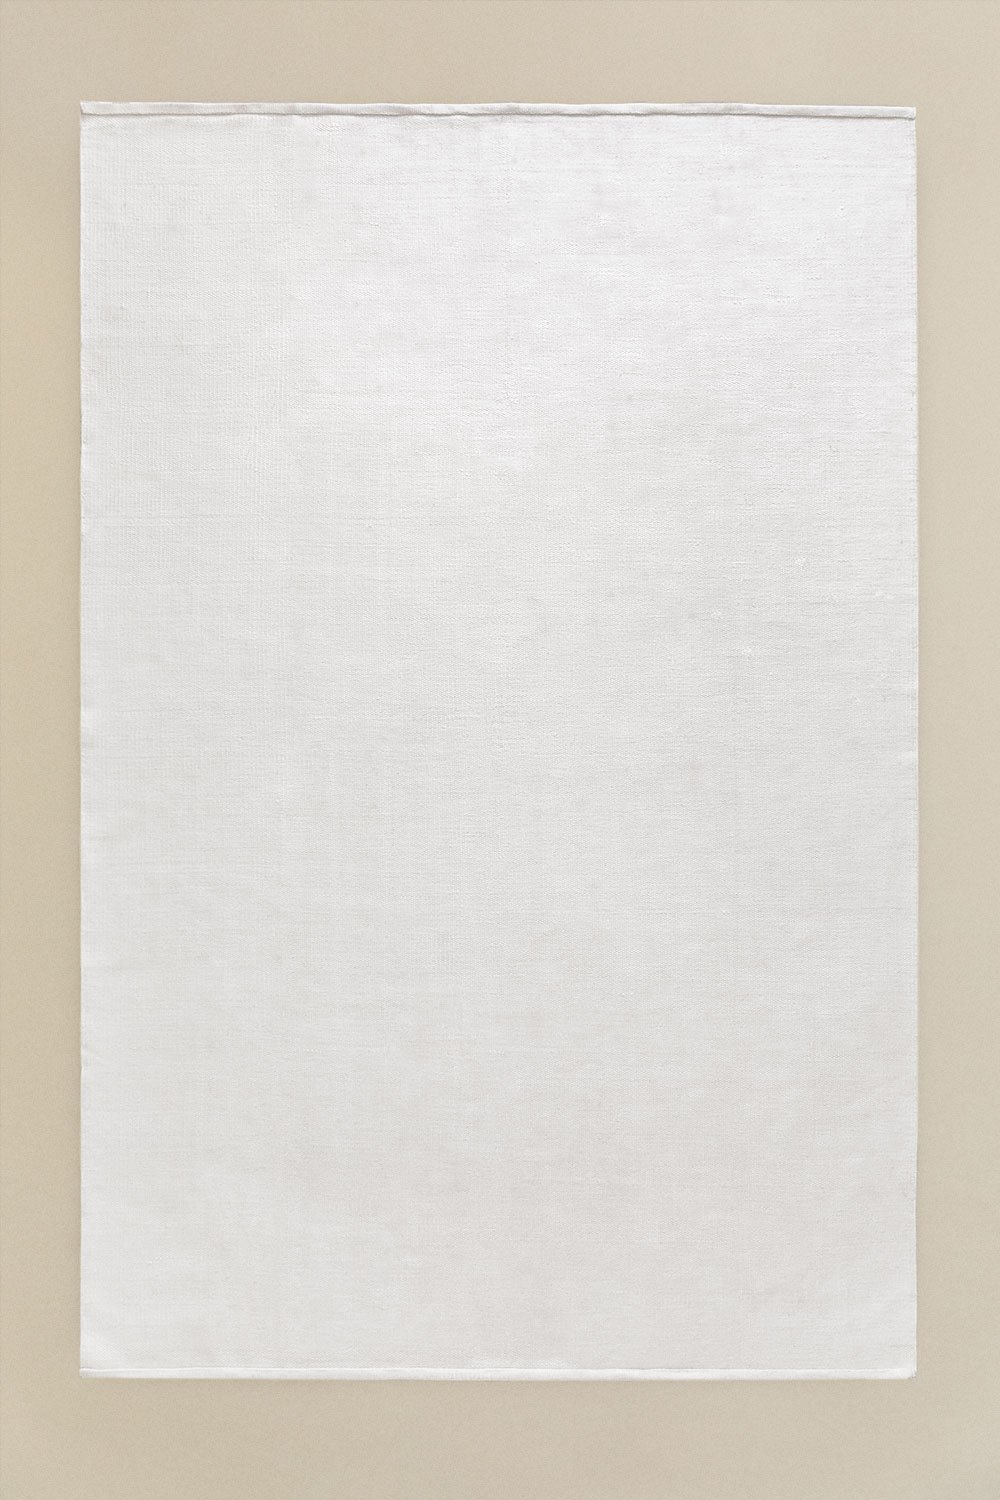 Buitentapijt (230x154 cm) Ginsberg, galerij beeld 1